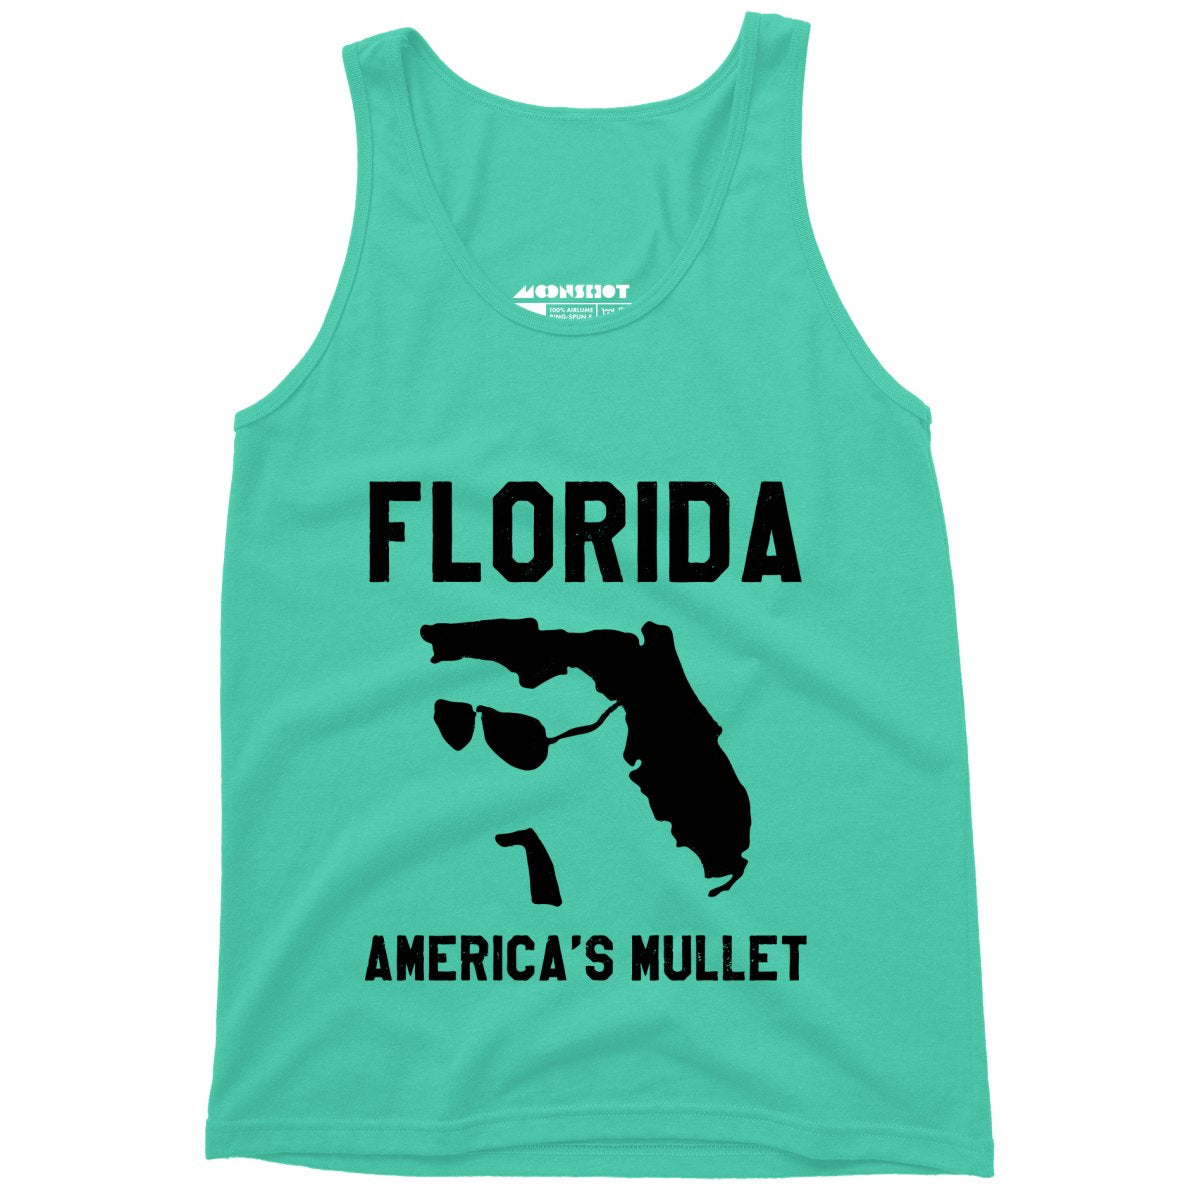 Florida America's Mullet - Unisex Tank Top